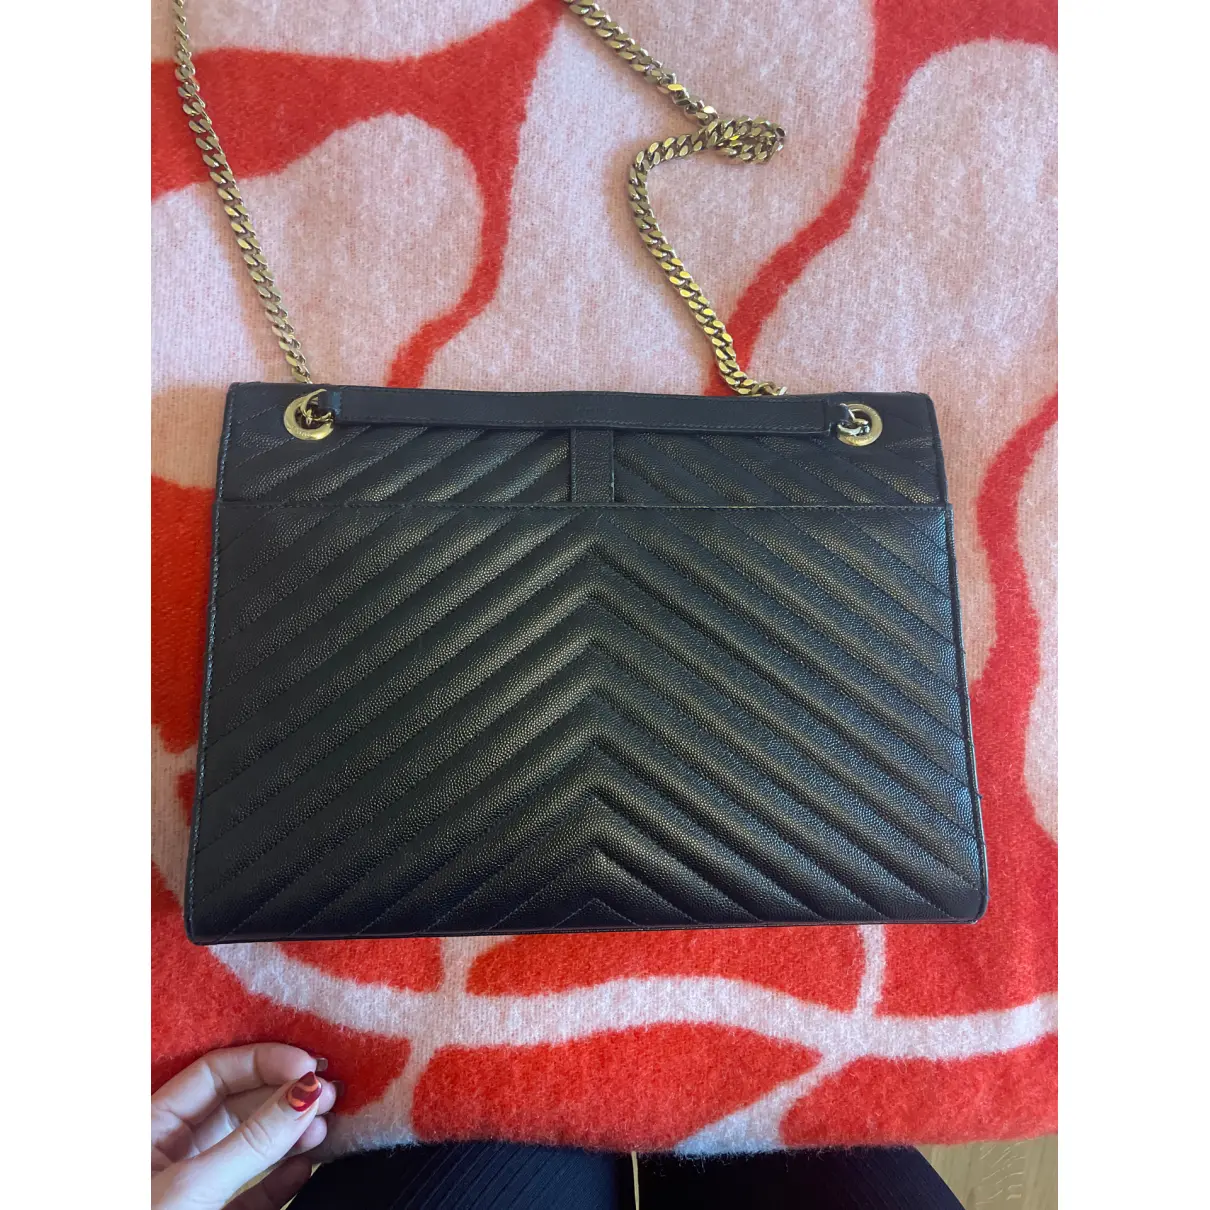 Envelope leather handbag Saint Laurent